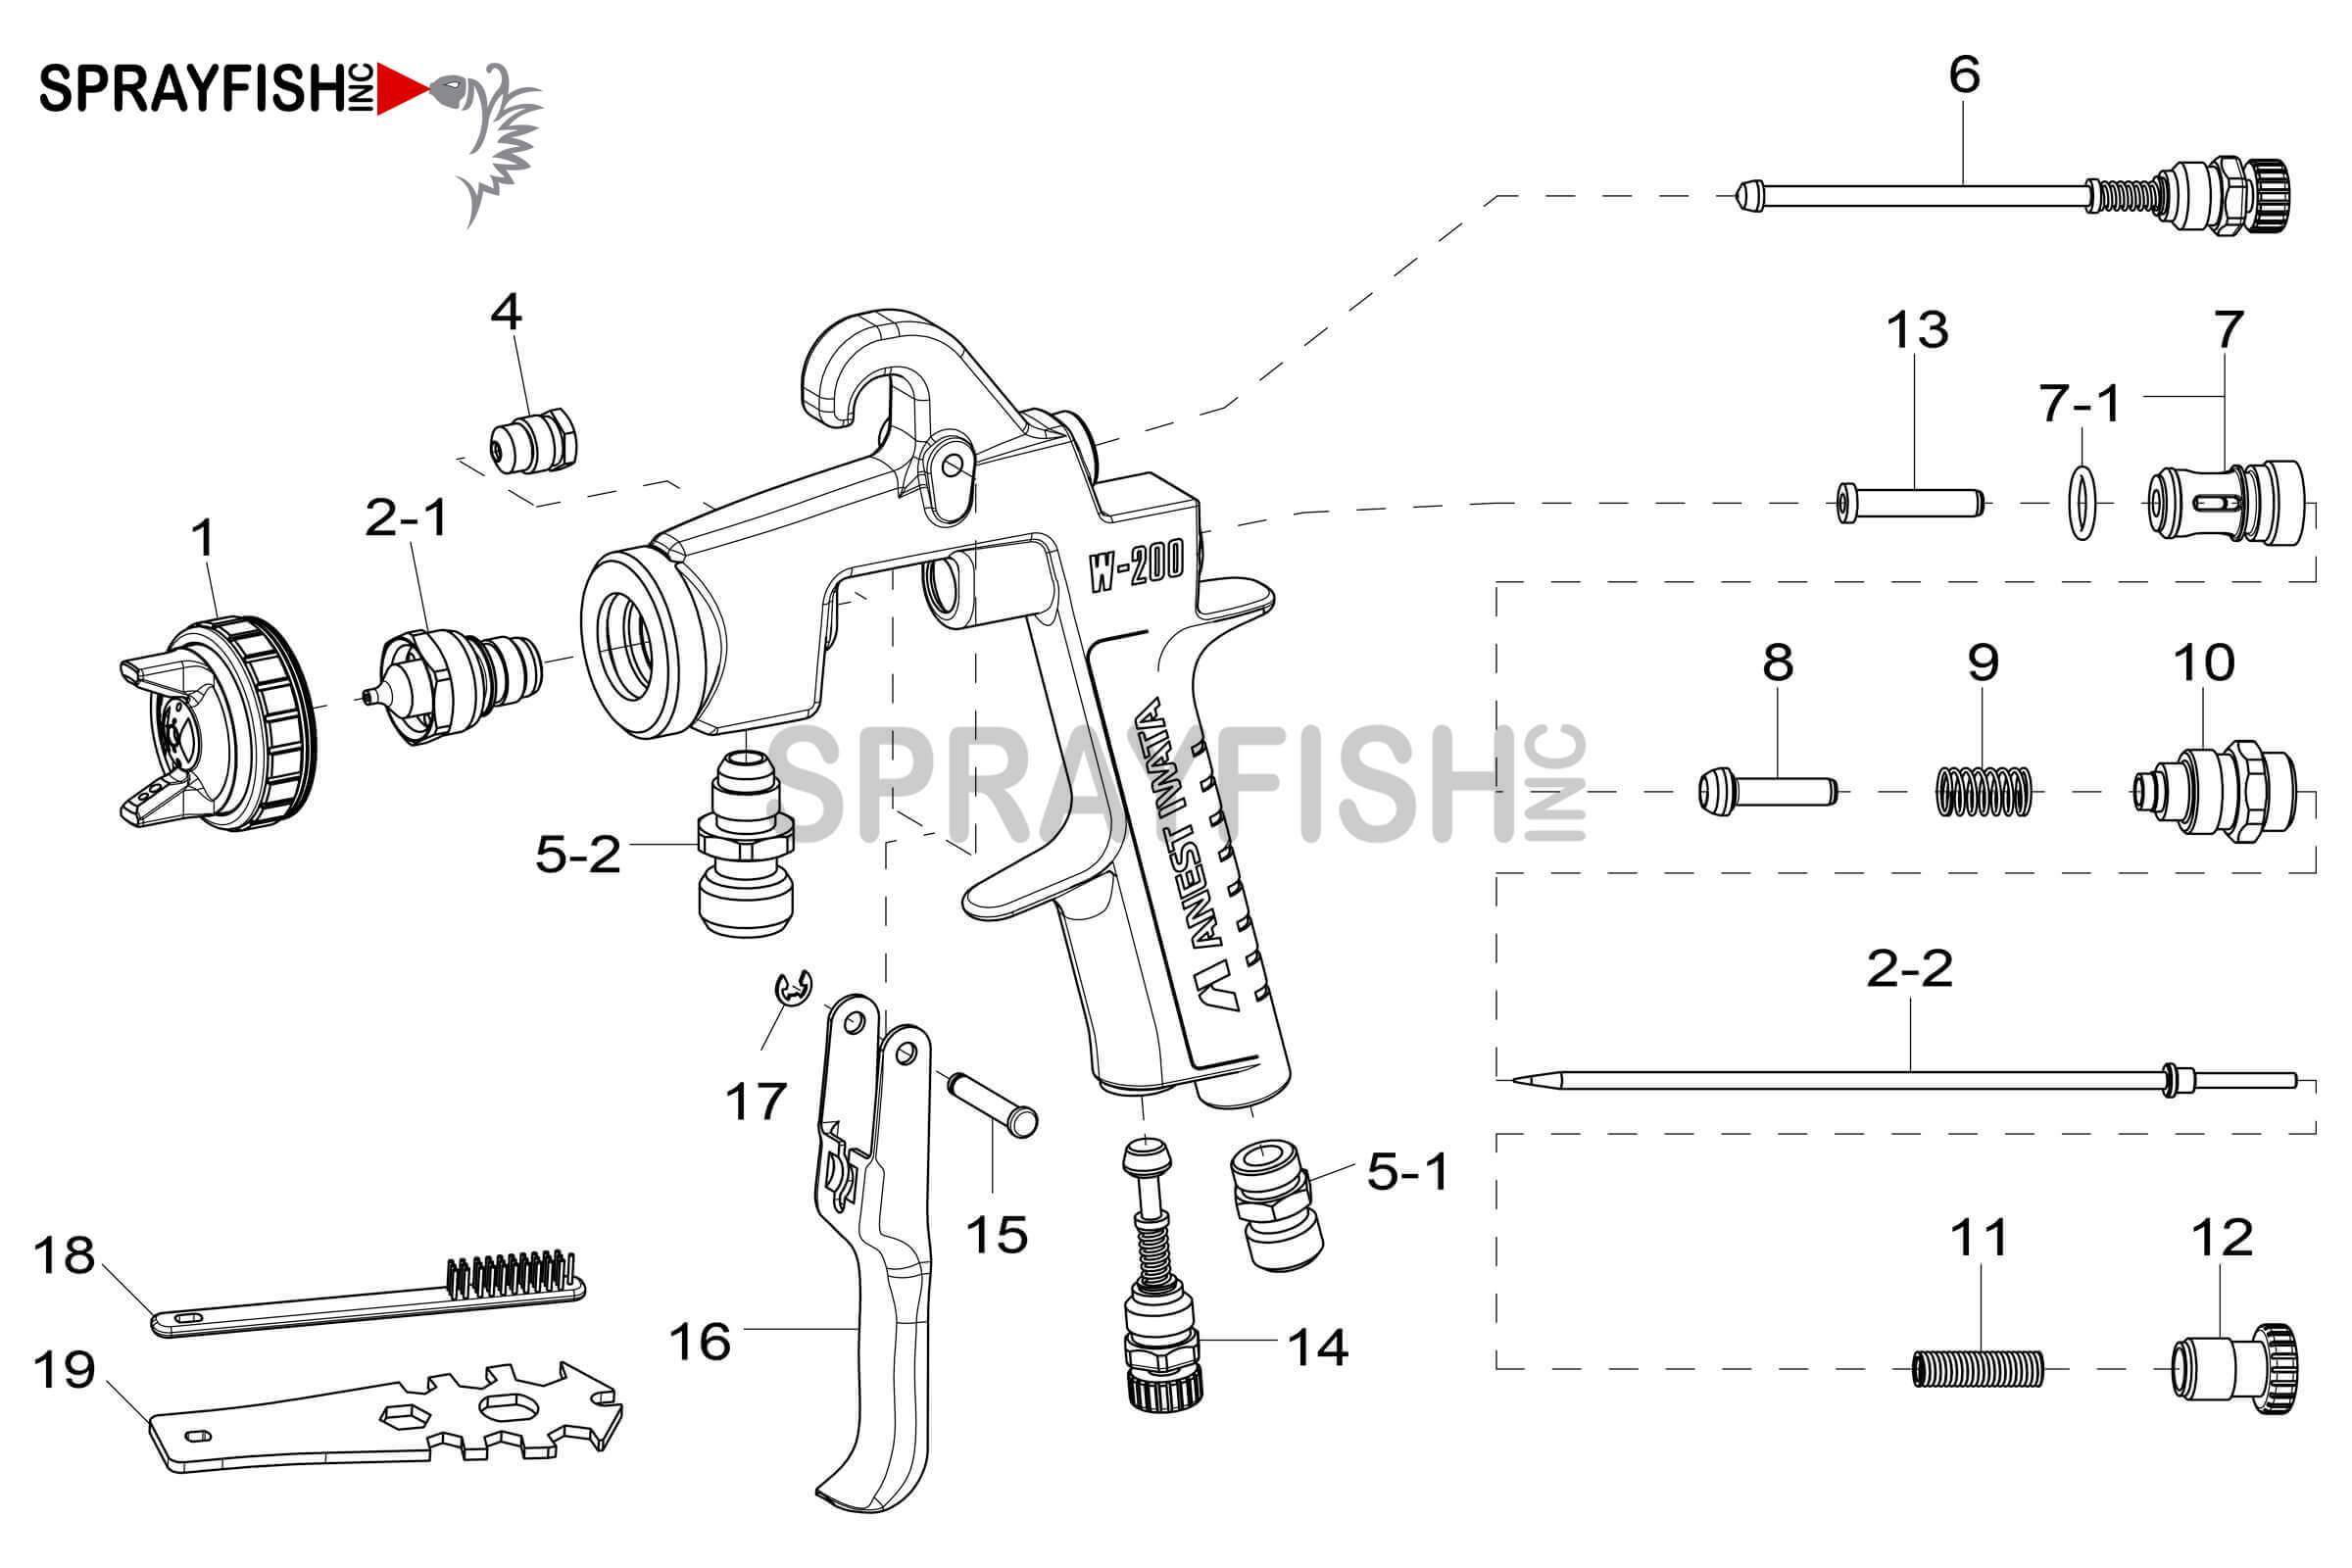 LPH-200 Pressure Feed Gun Spare Parts Breakdown